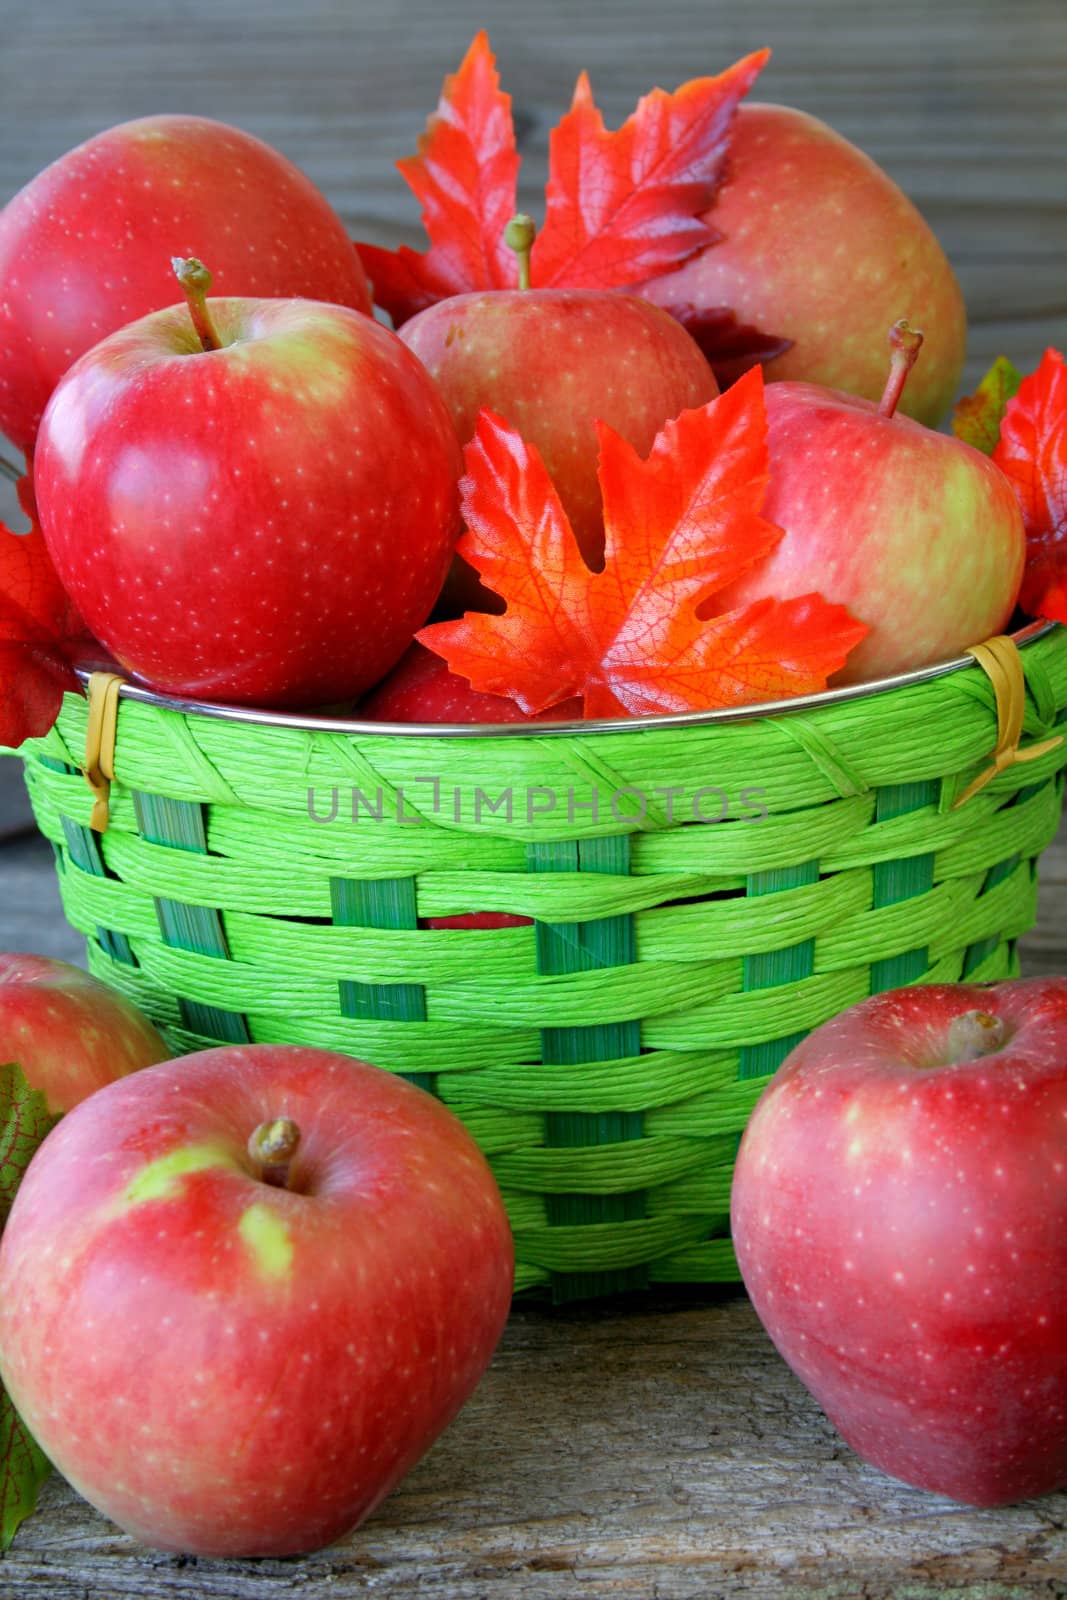 Fresh Apples by thephotoguy